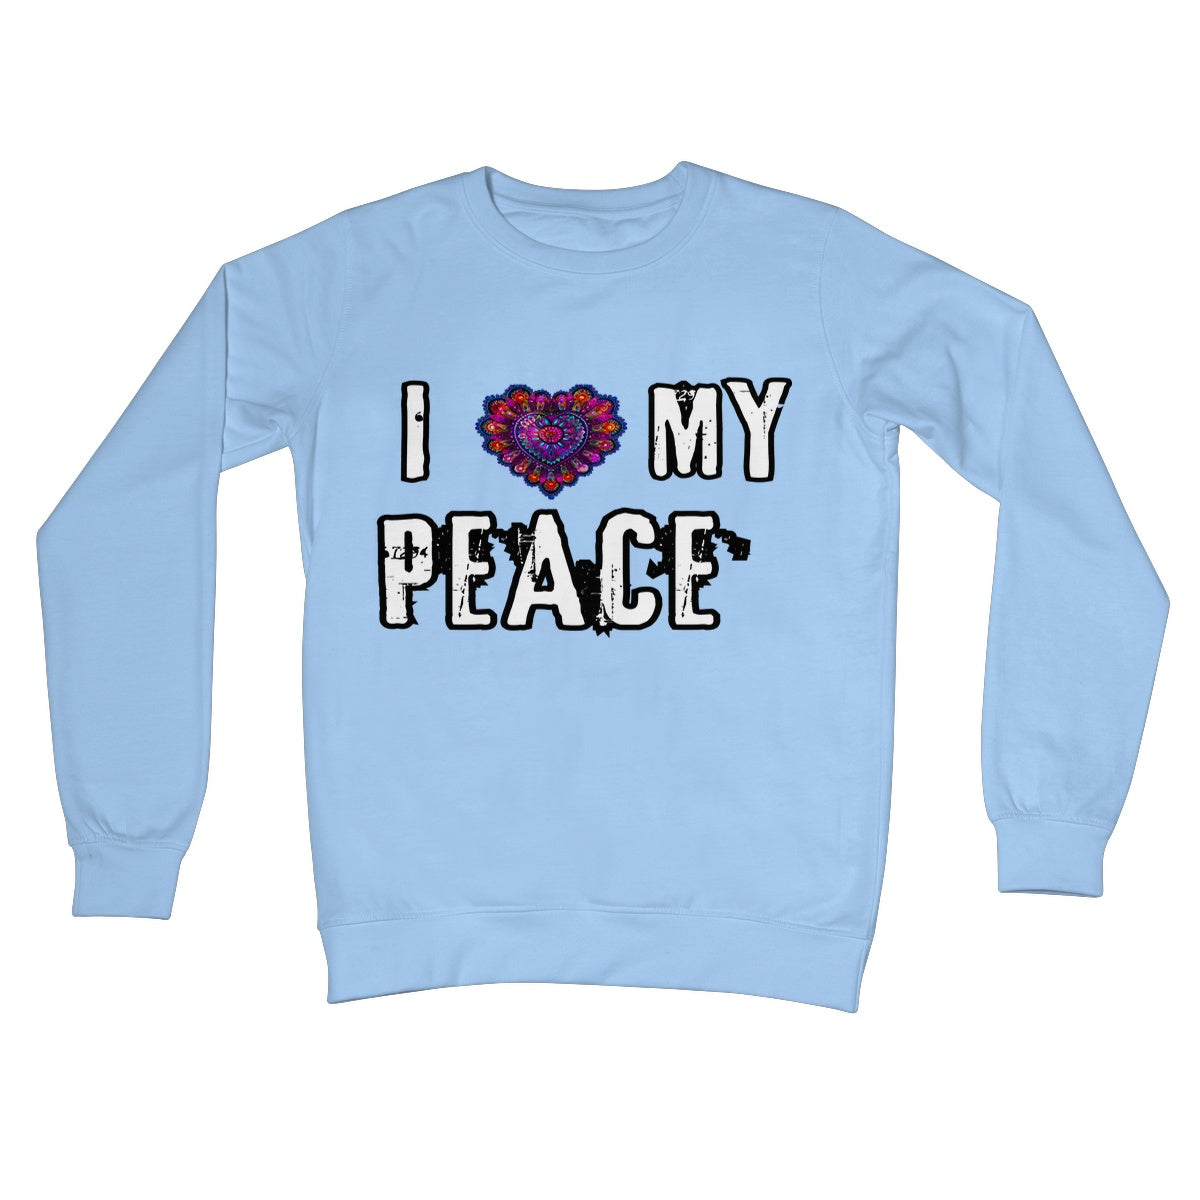 I Love My Peace Crew Neck Sweatshirt